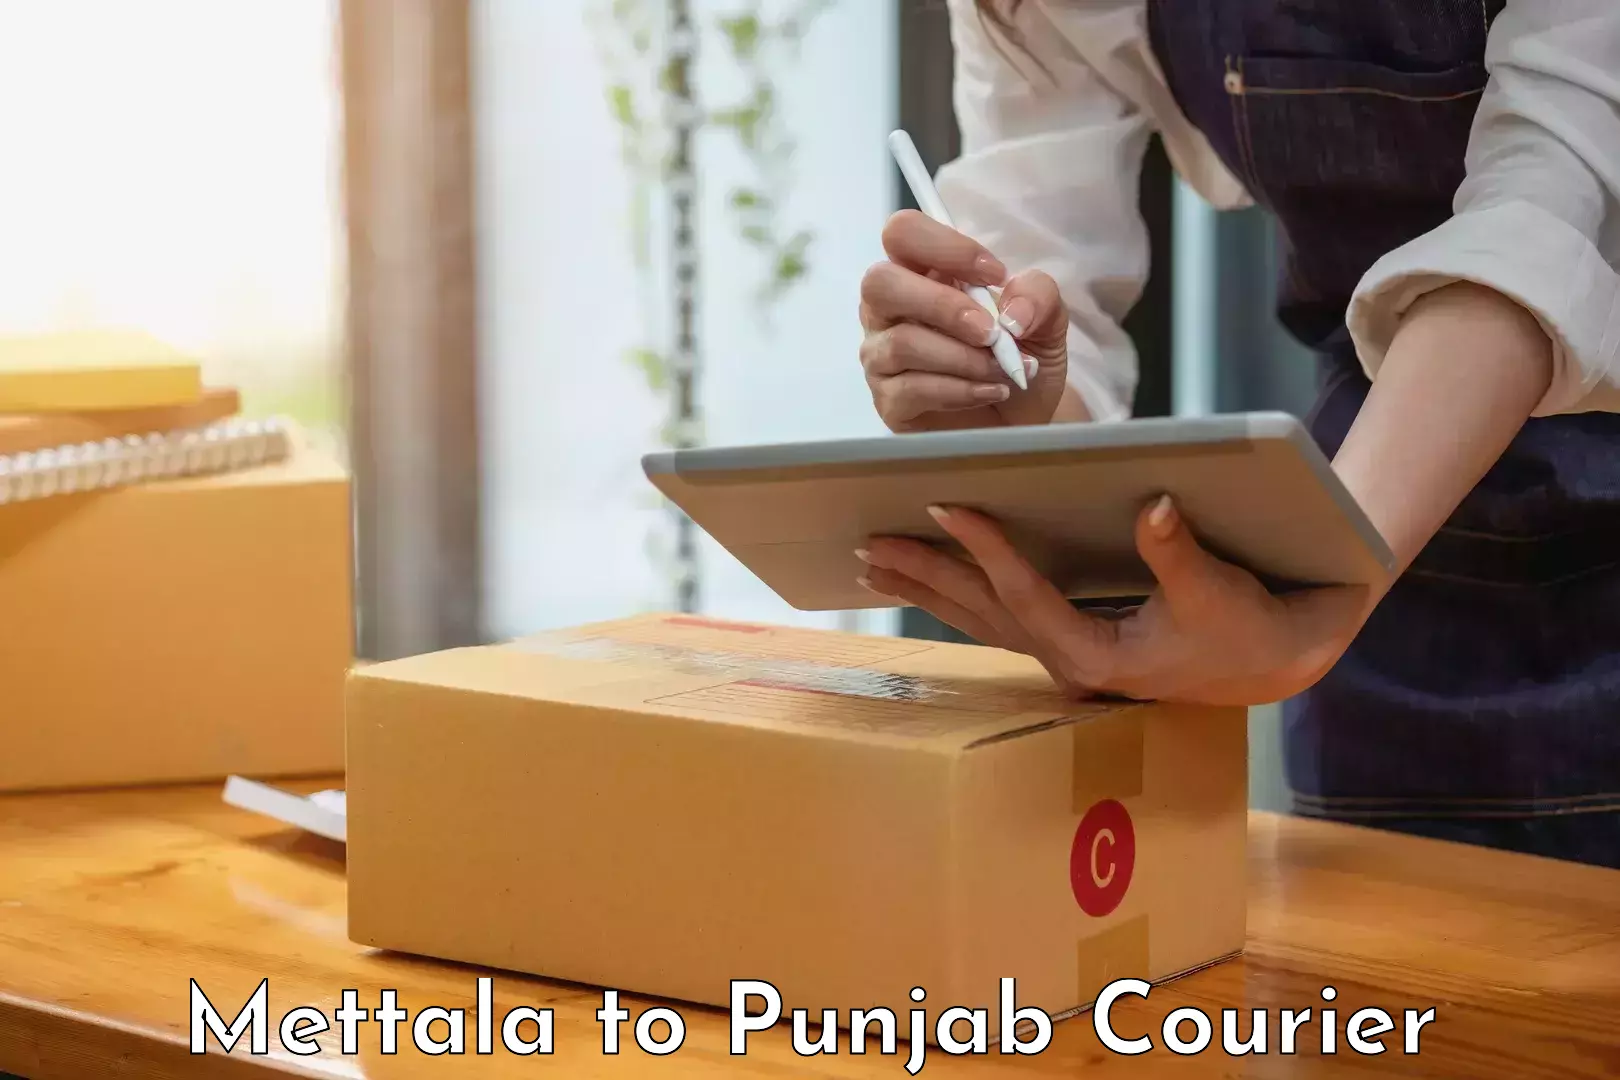 Bulk courier orders Mettala to Punjab